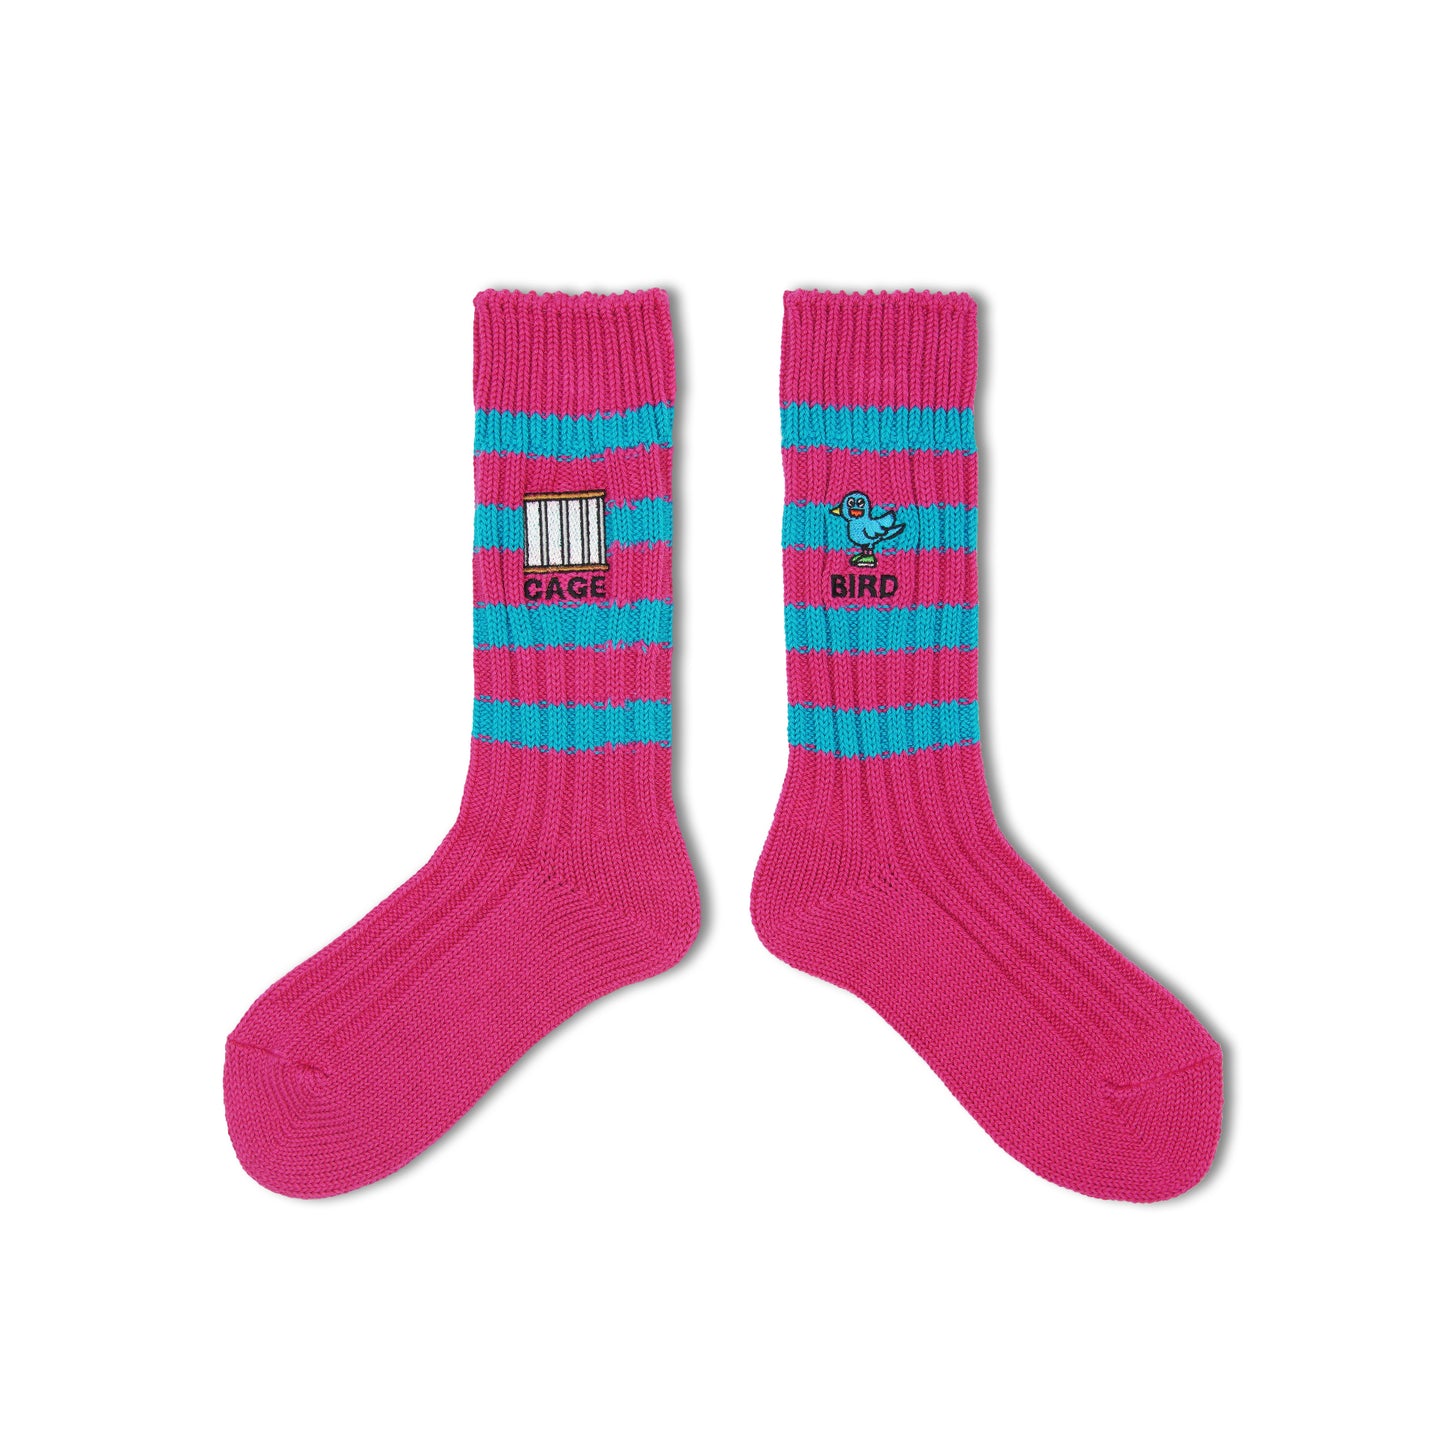 Heavyweight Socks Stripes | CAGE-BIRD | Pink